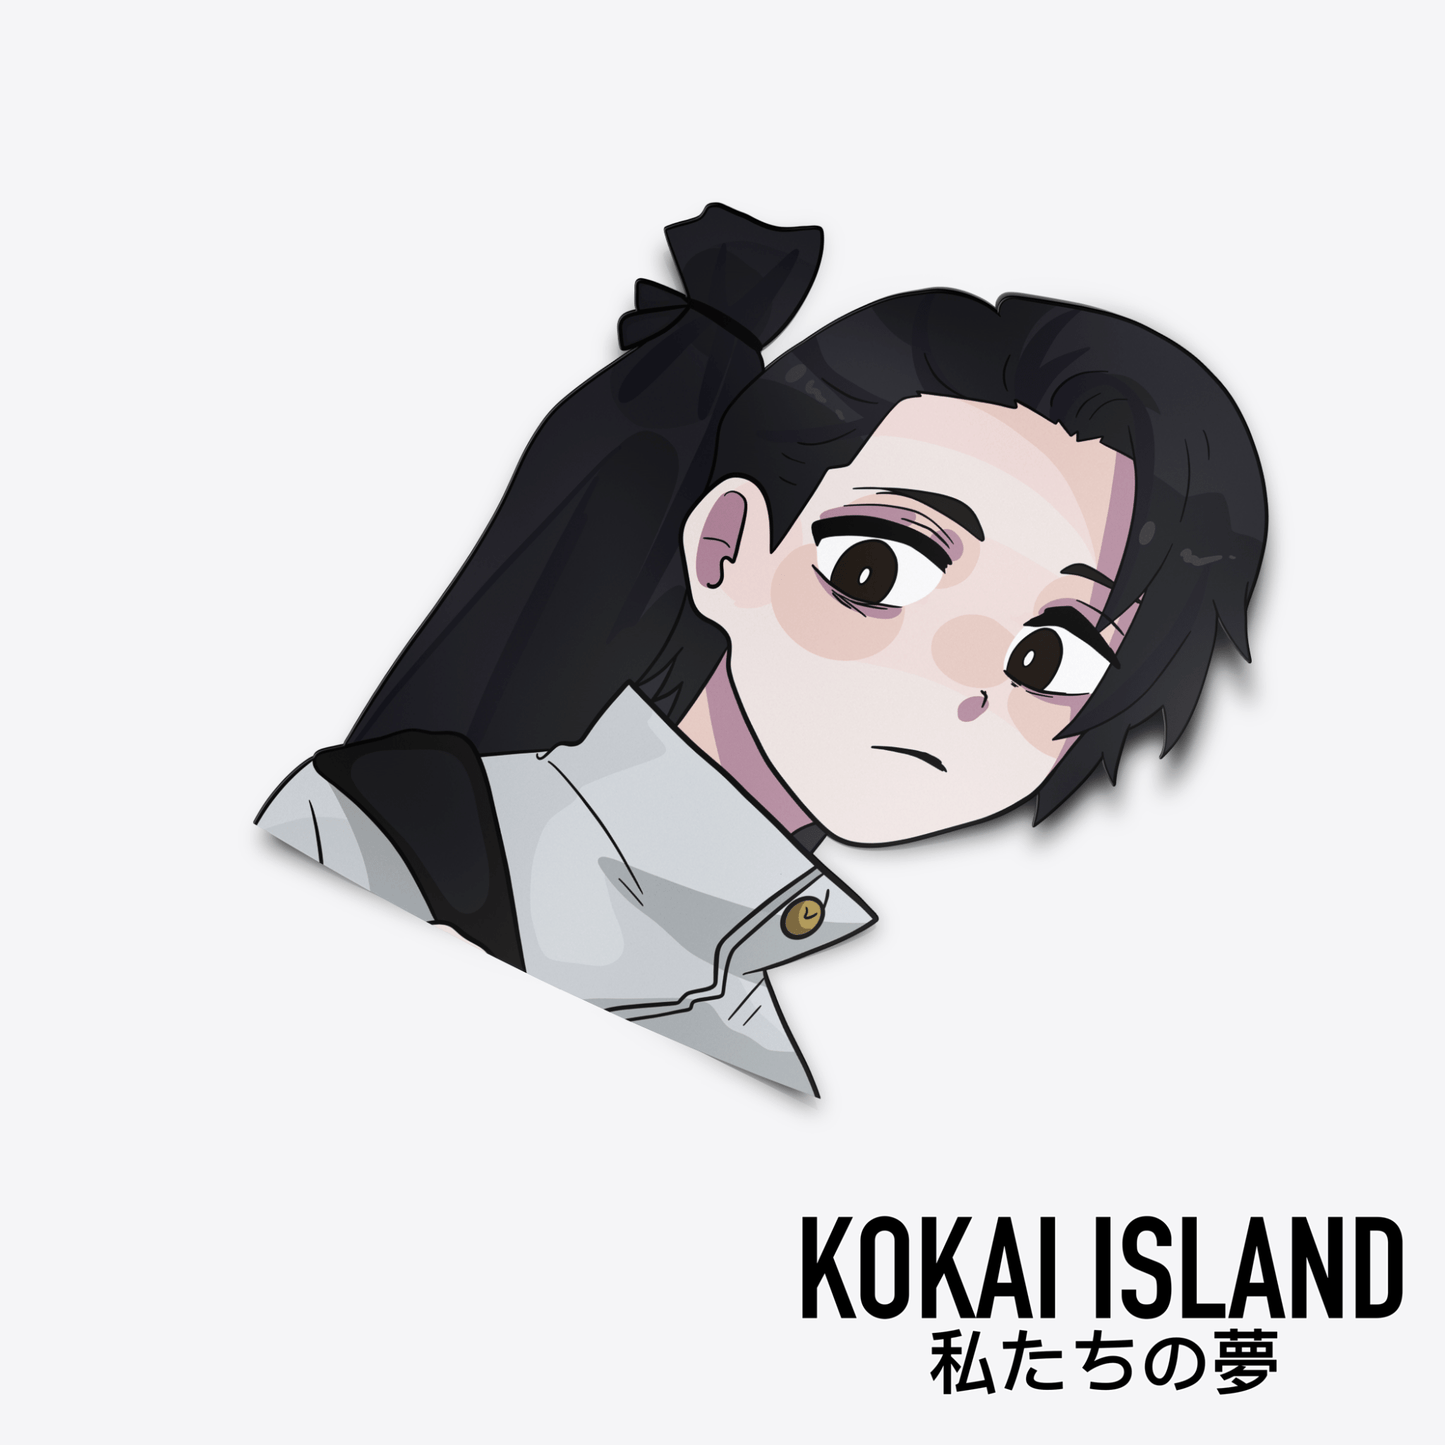 Special Grade Sorcerer DecalDecalKokai Island